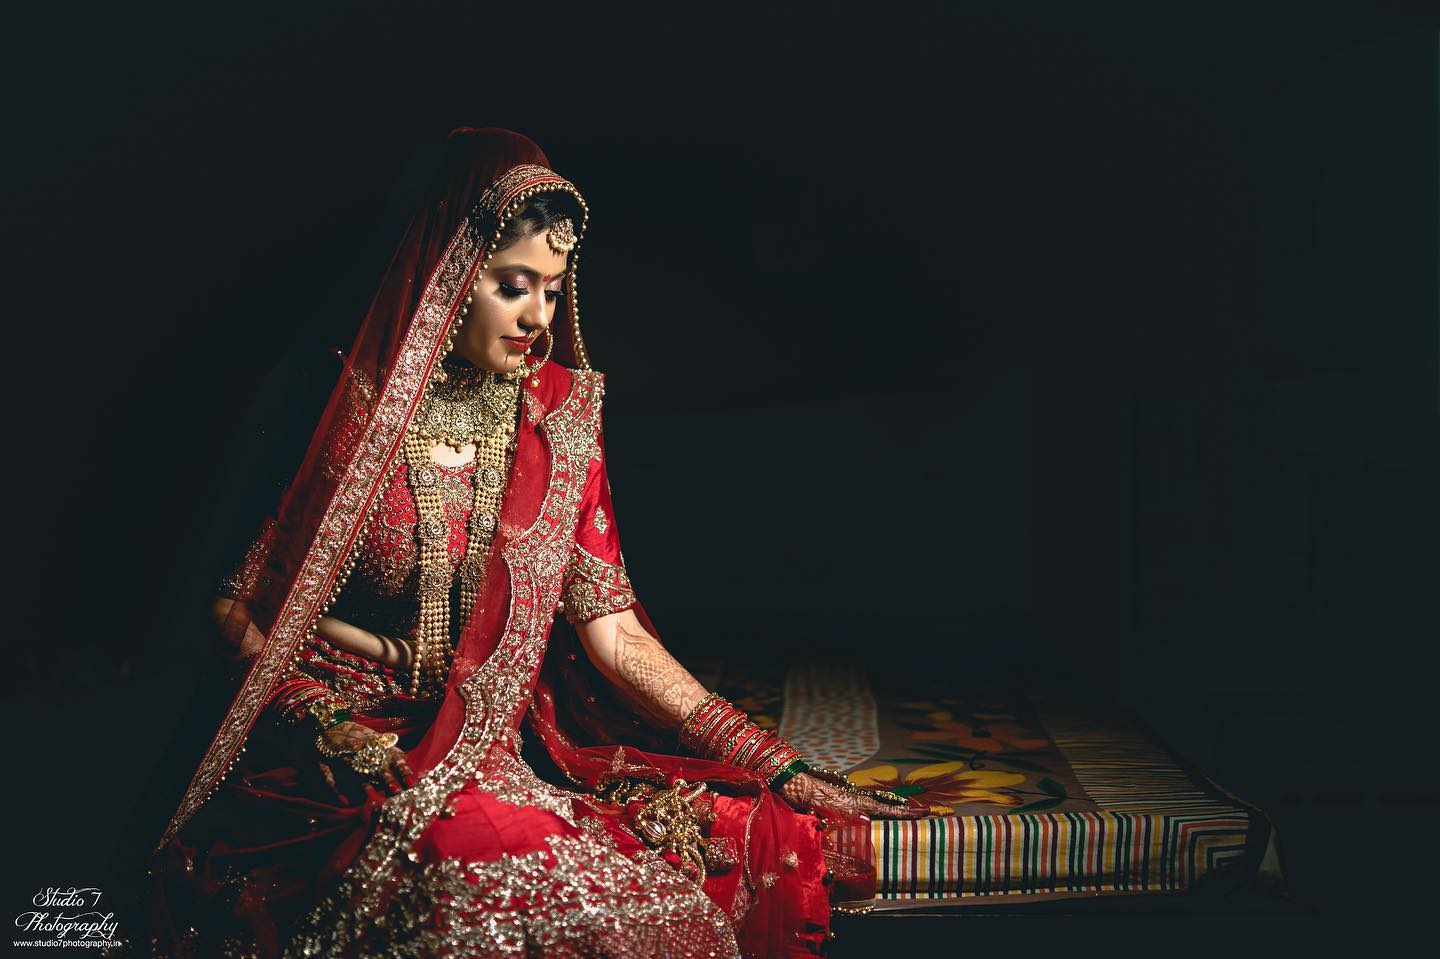 Studio7  Wedding Photographer, Mumbai